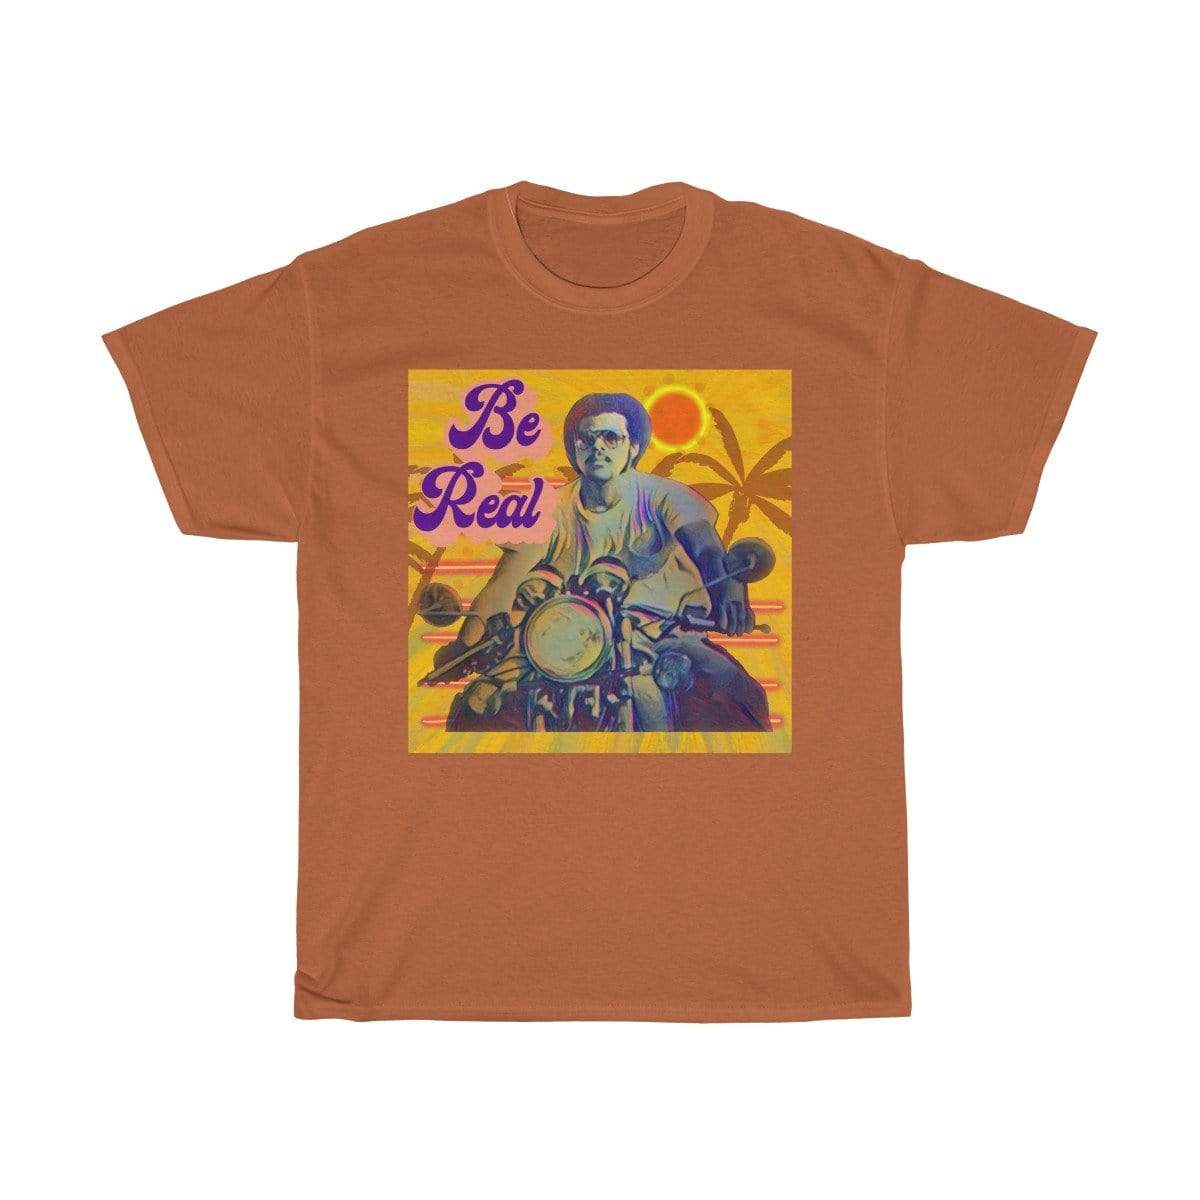 Plumskum T-Shirt Texas Orange / S Bereal MotoClub Heavy Cotton Tee